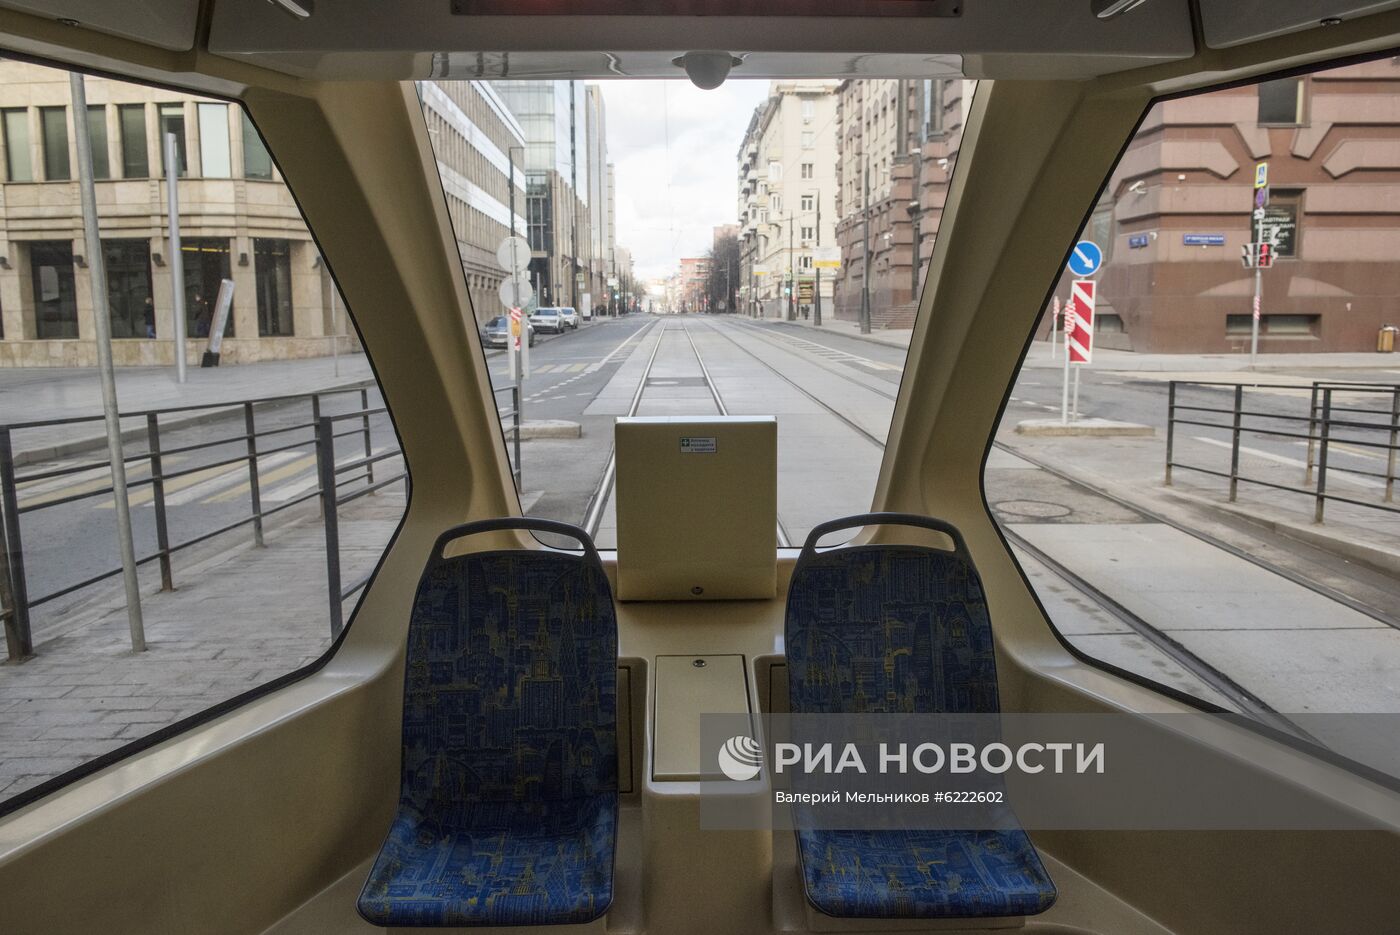 Московский транспорт в условиях режима самоизоляции жителей